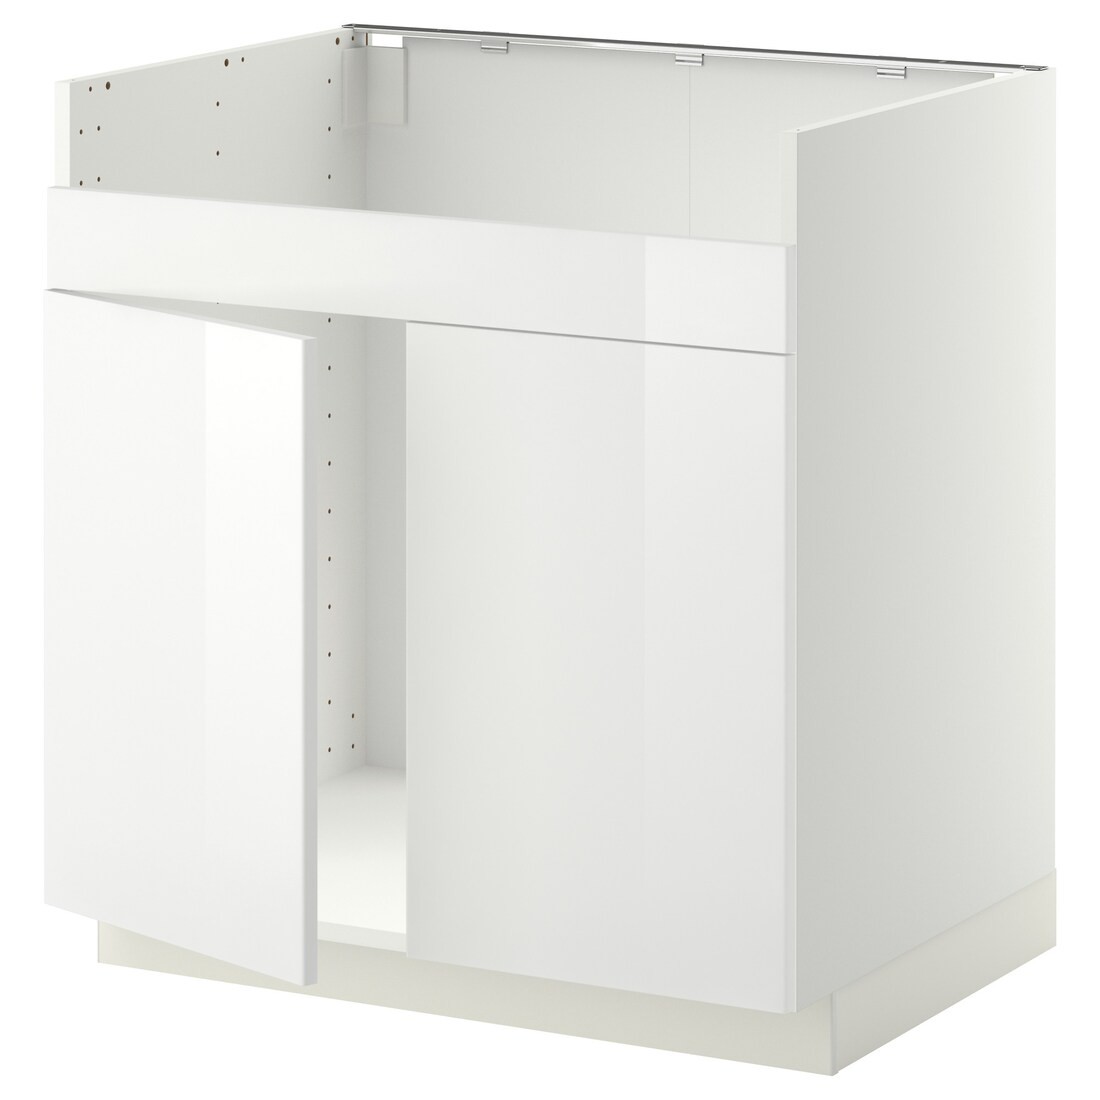 IKEA METOD МЕТОД Шкаф под мойку HAVSEN, белый / Ringhult белый, 80x60 см 09456905 094.569.05